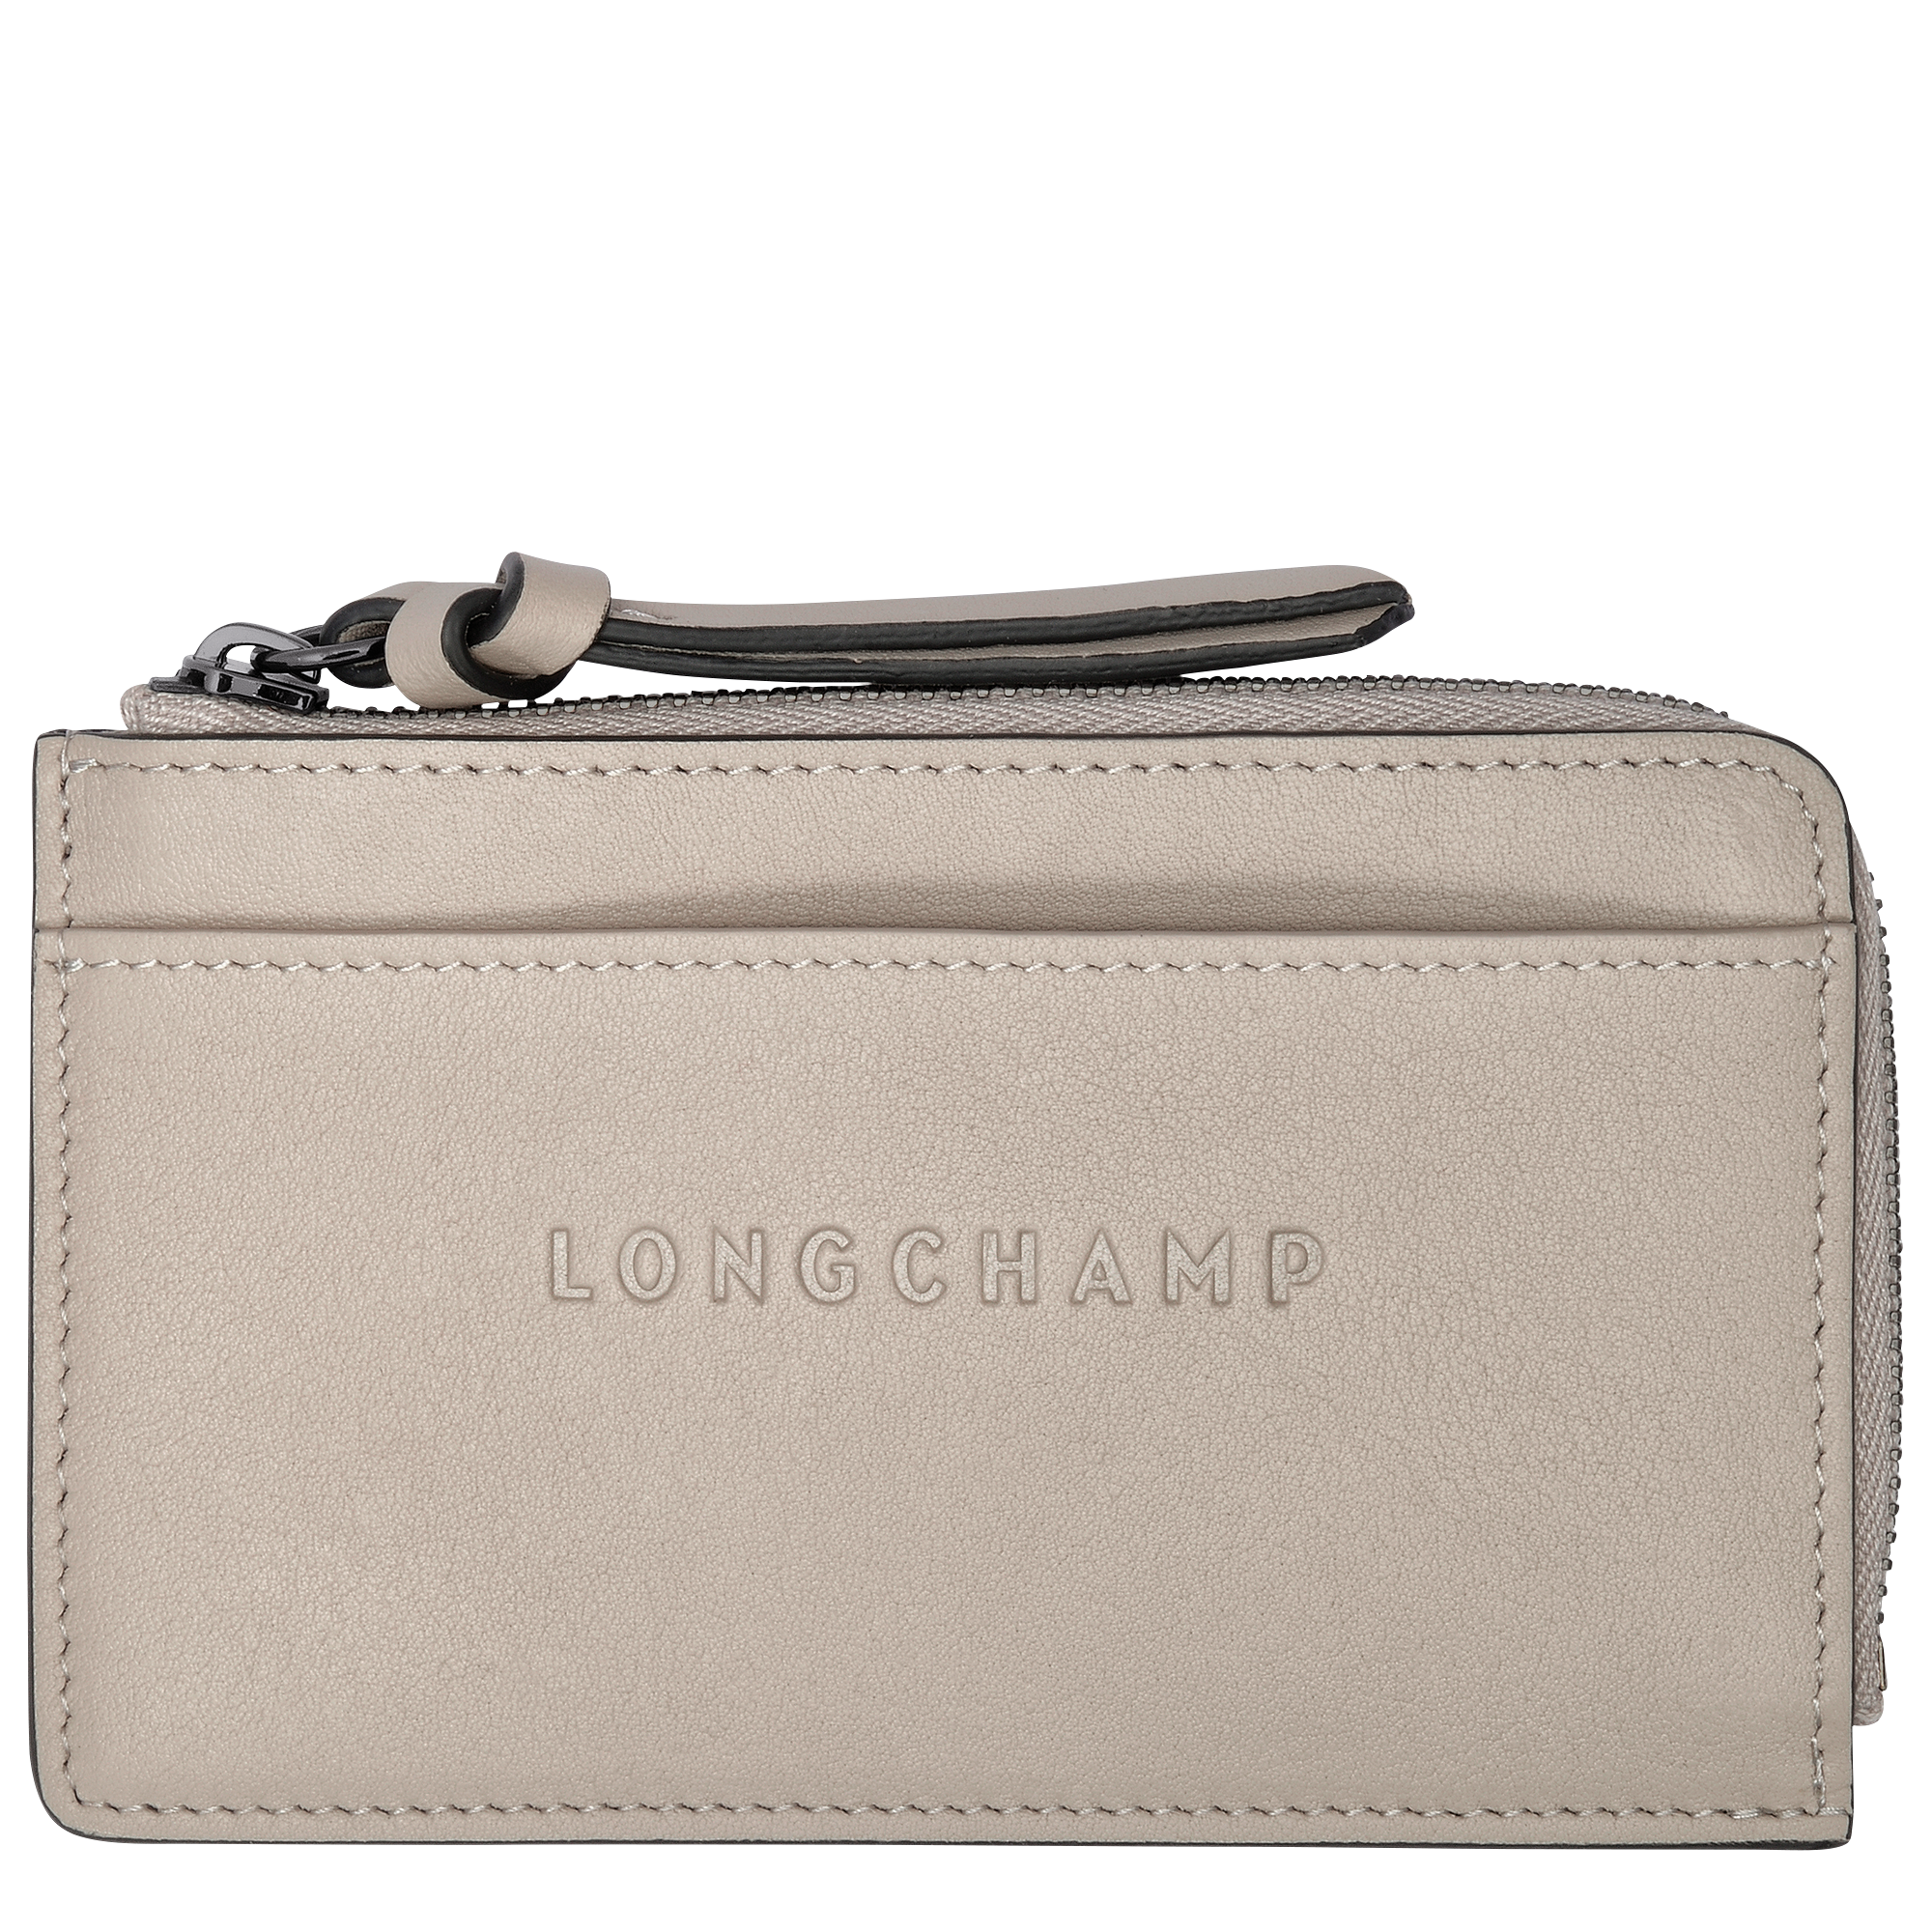 Longchamp 3D 卡夹, 土褐色